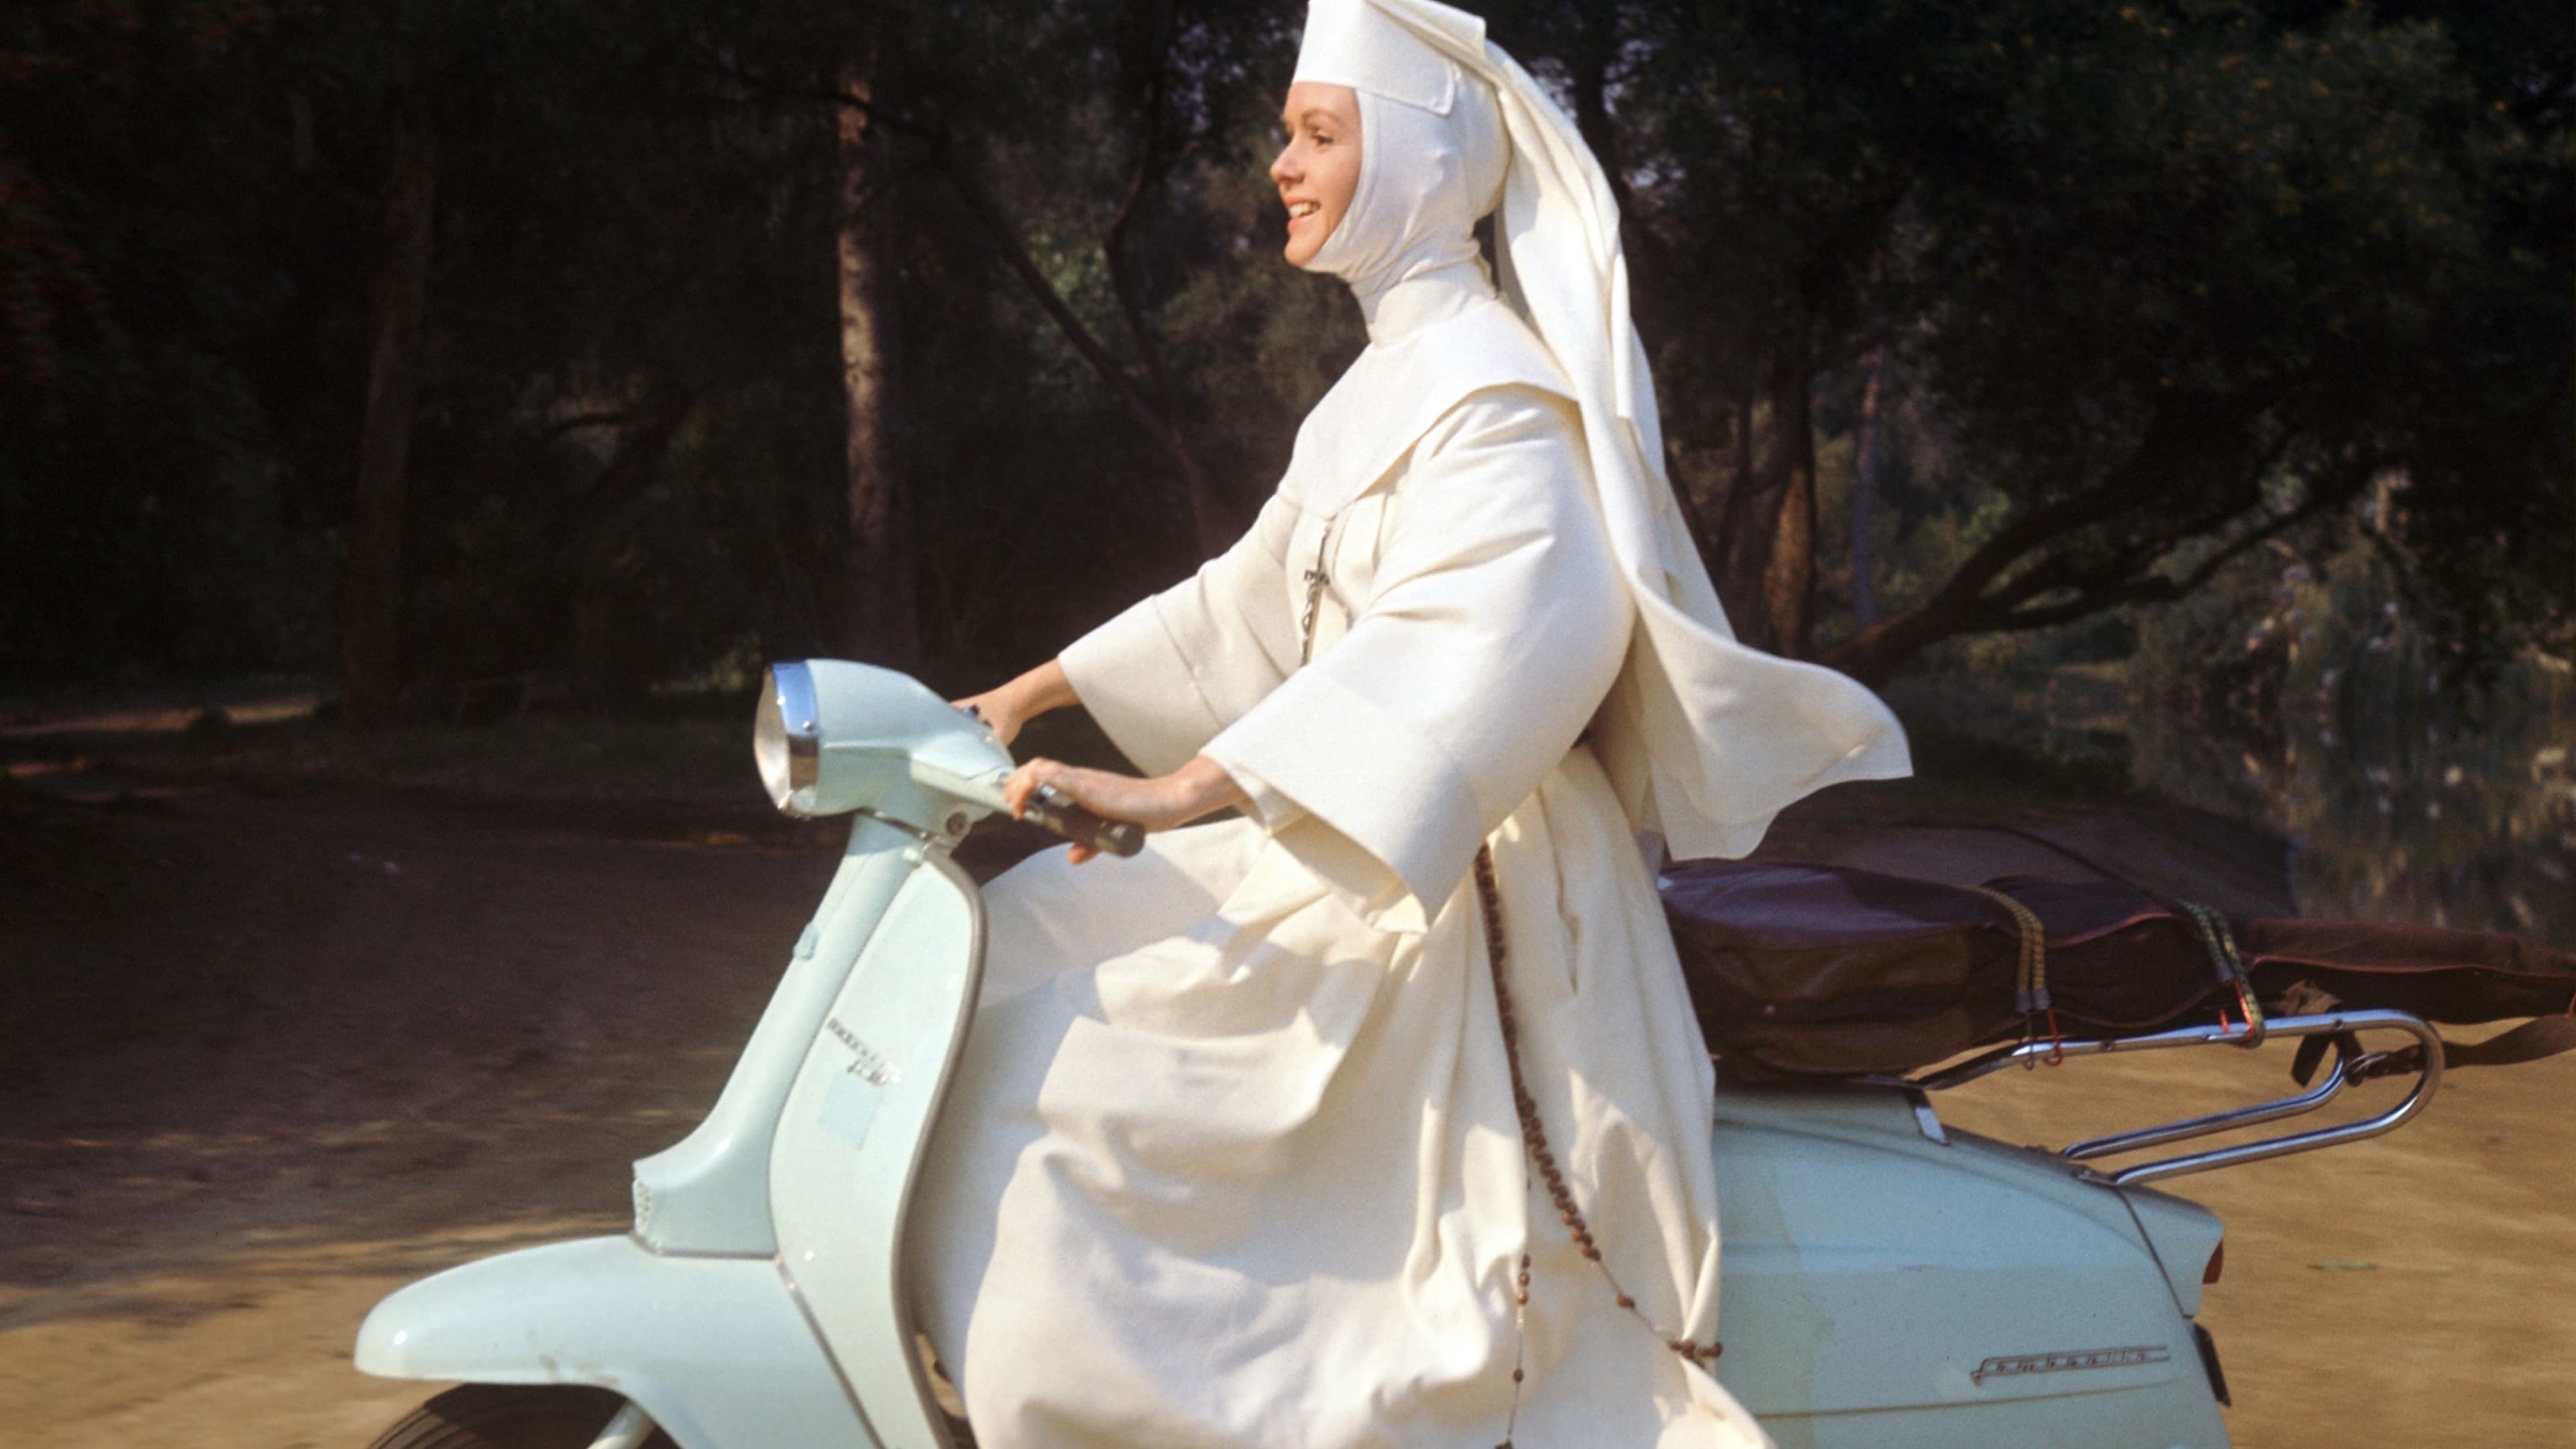 Dominique – Die singende Nonne (1966)